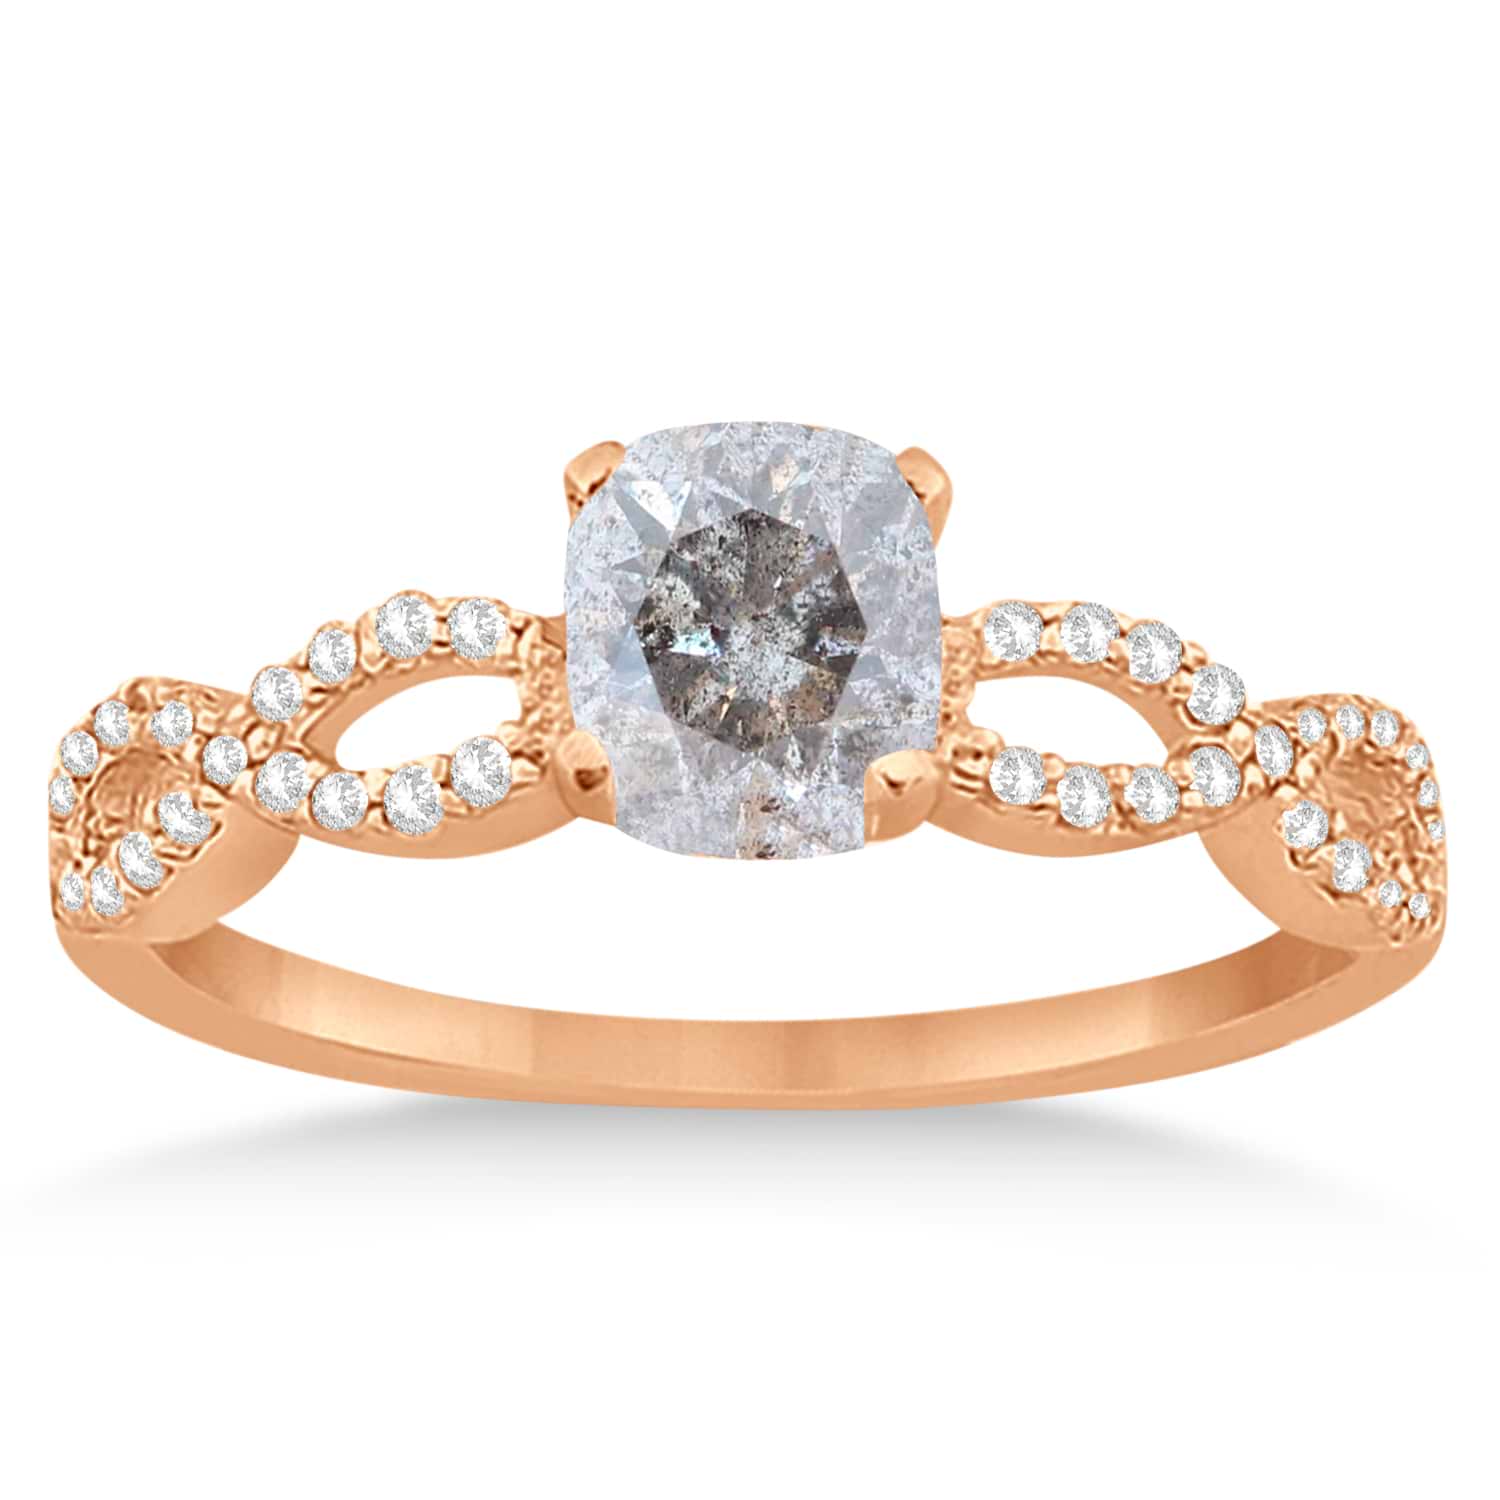 Infinity Cushion-Cut Salt & Pepper Diamond Bridal Ring Set 18k Rose Gold (0.63ct)